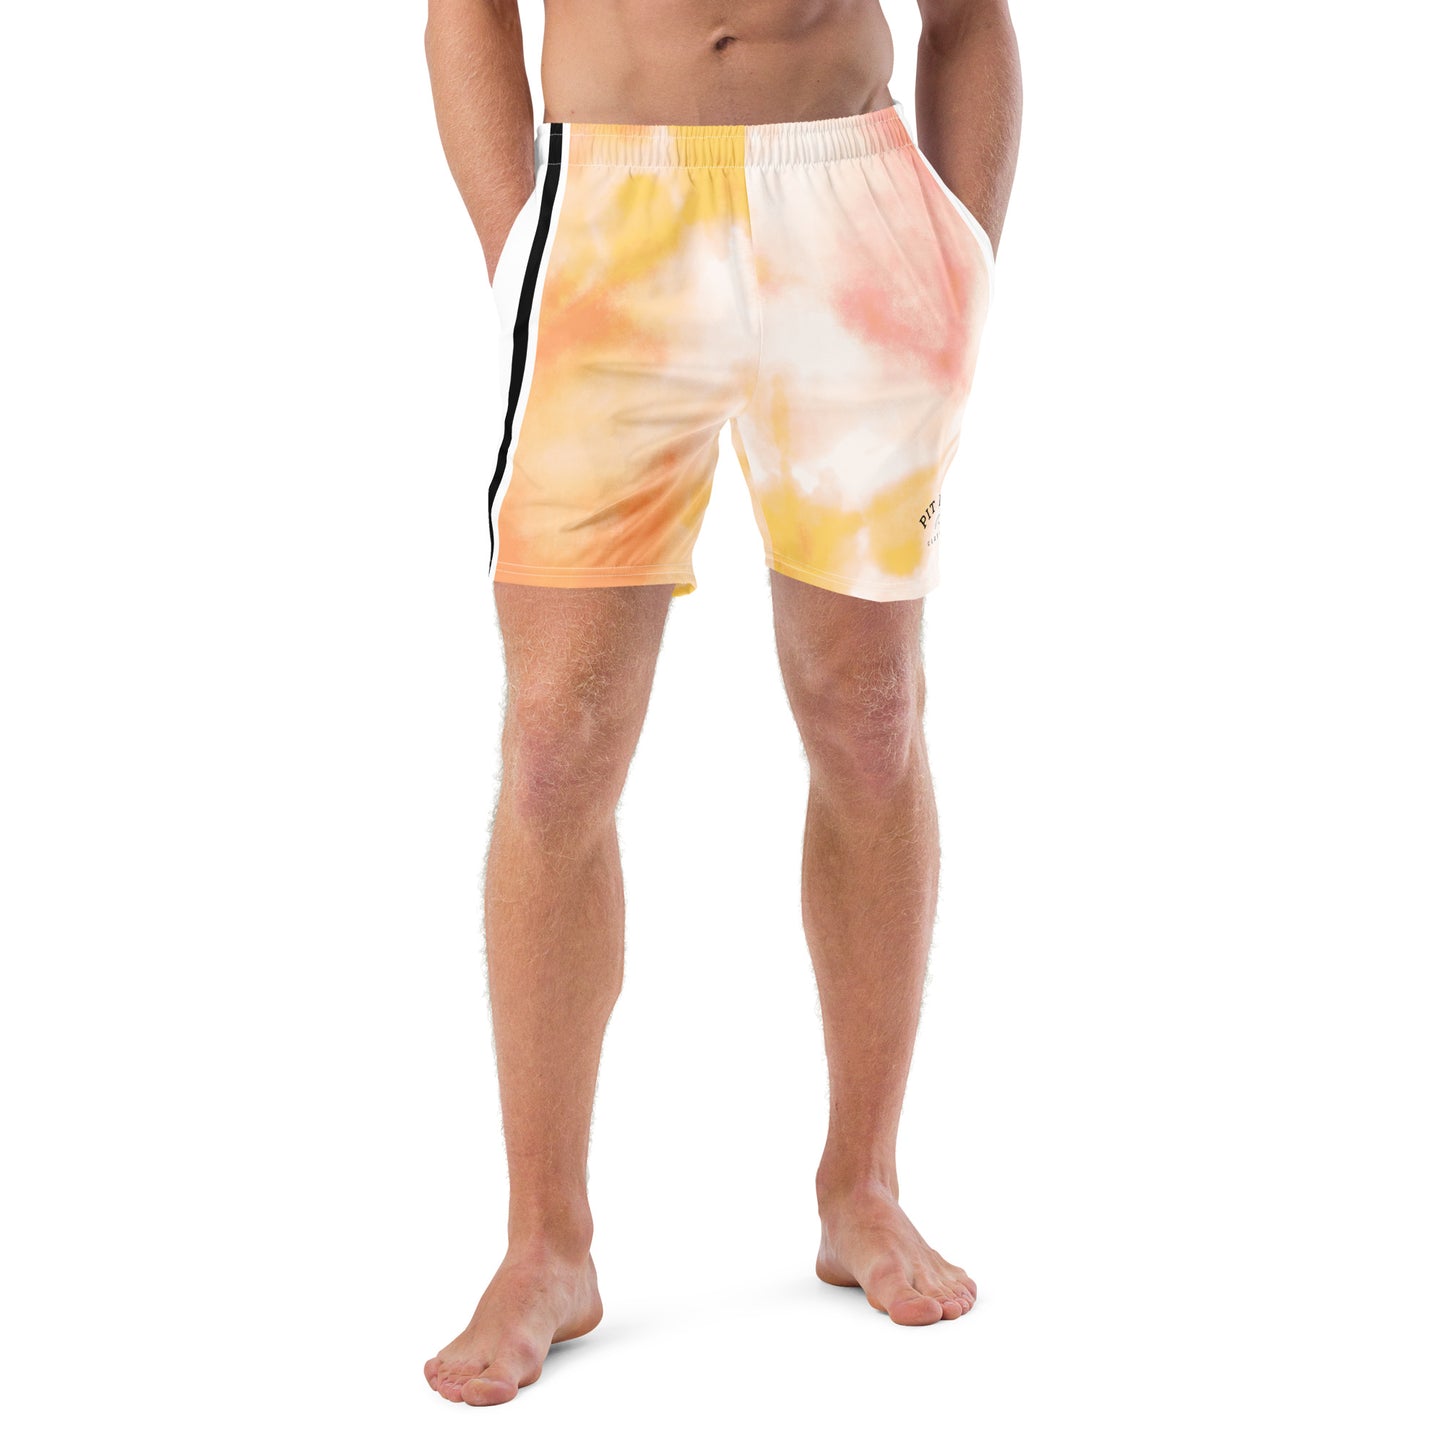 PIT LANE CLOTHING Peachskin swim trunks